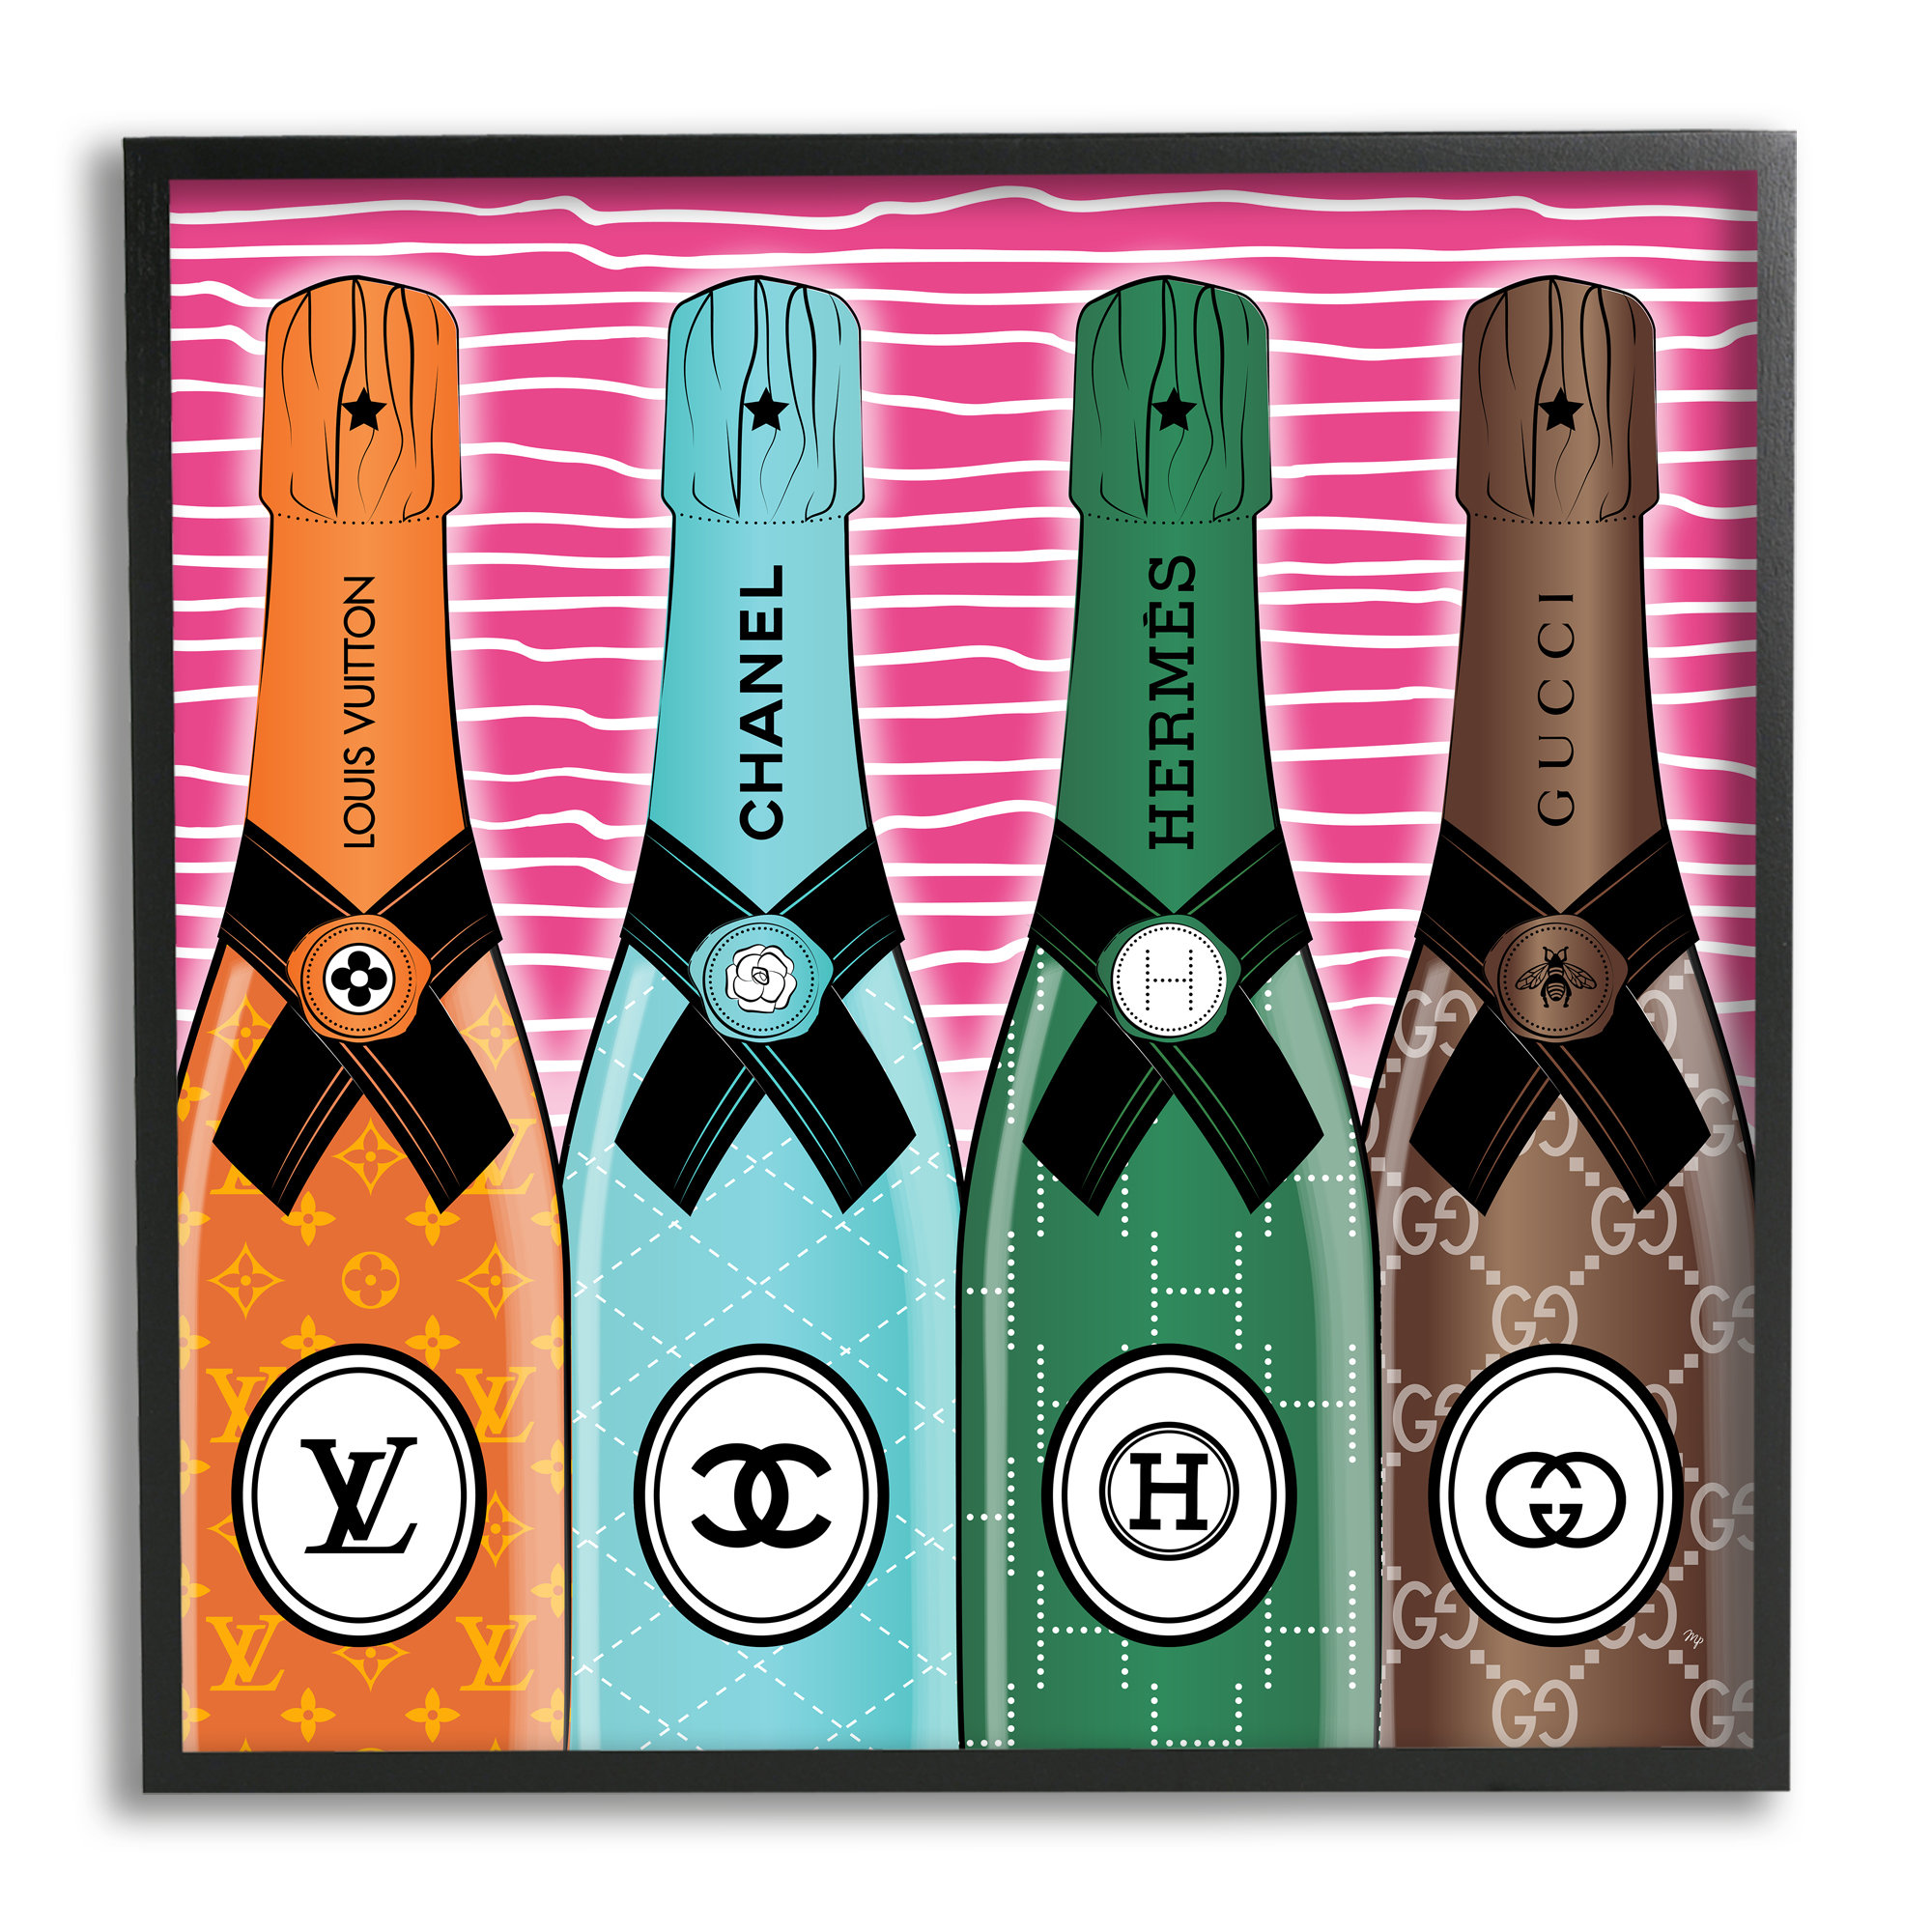 Stupell Industries Fashion Logo Champagne Bottles Framed On Wood by Martina  Pavlova Graphic Art